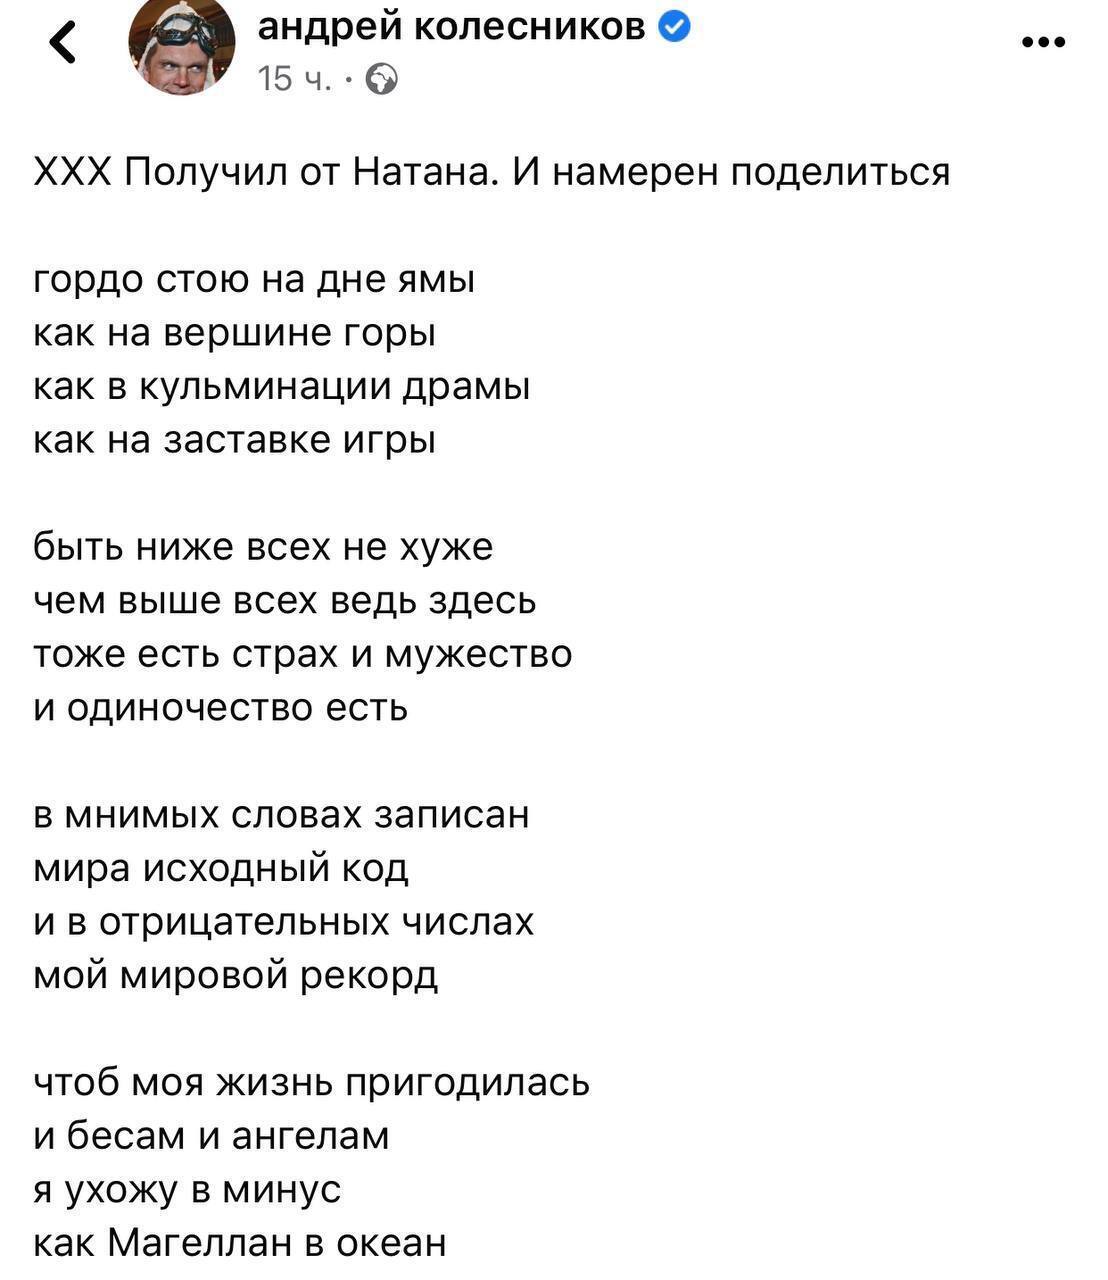 Сурков после ареста написал стих